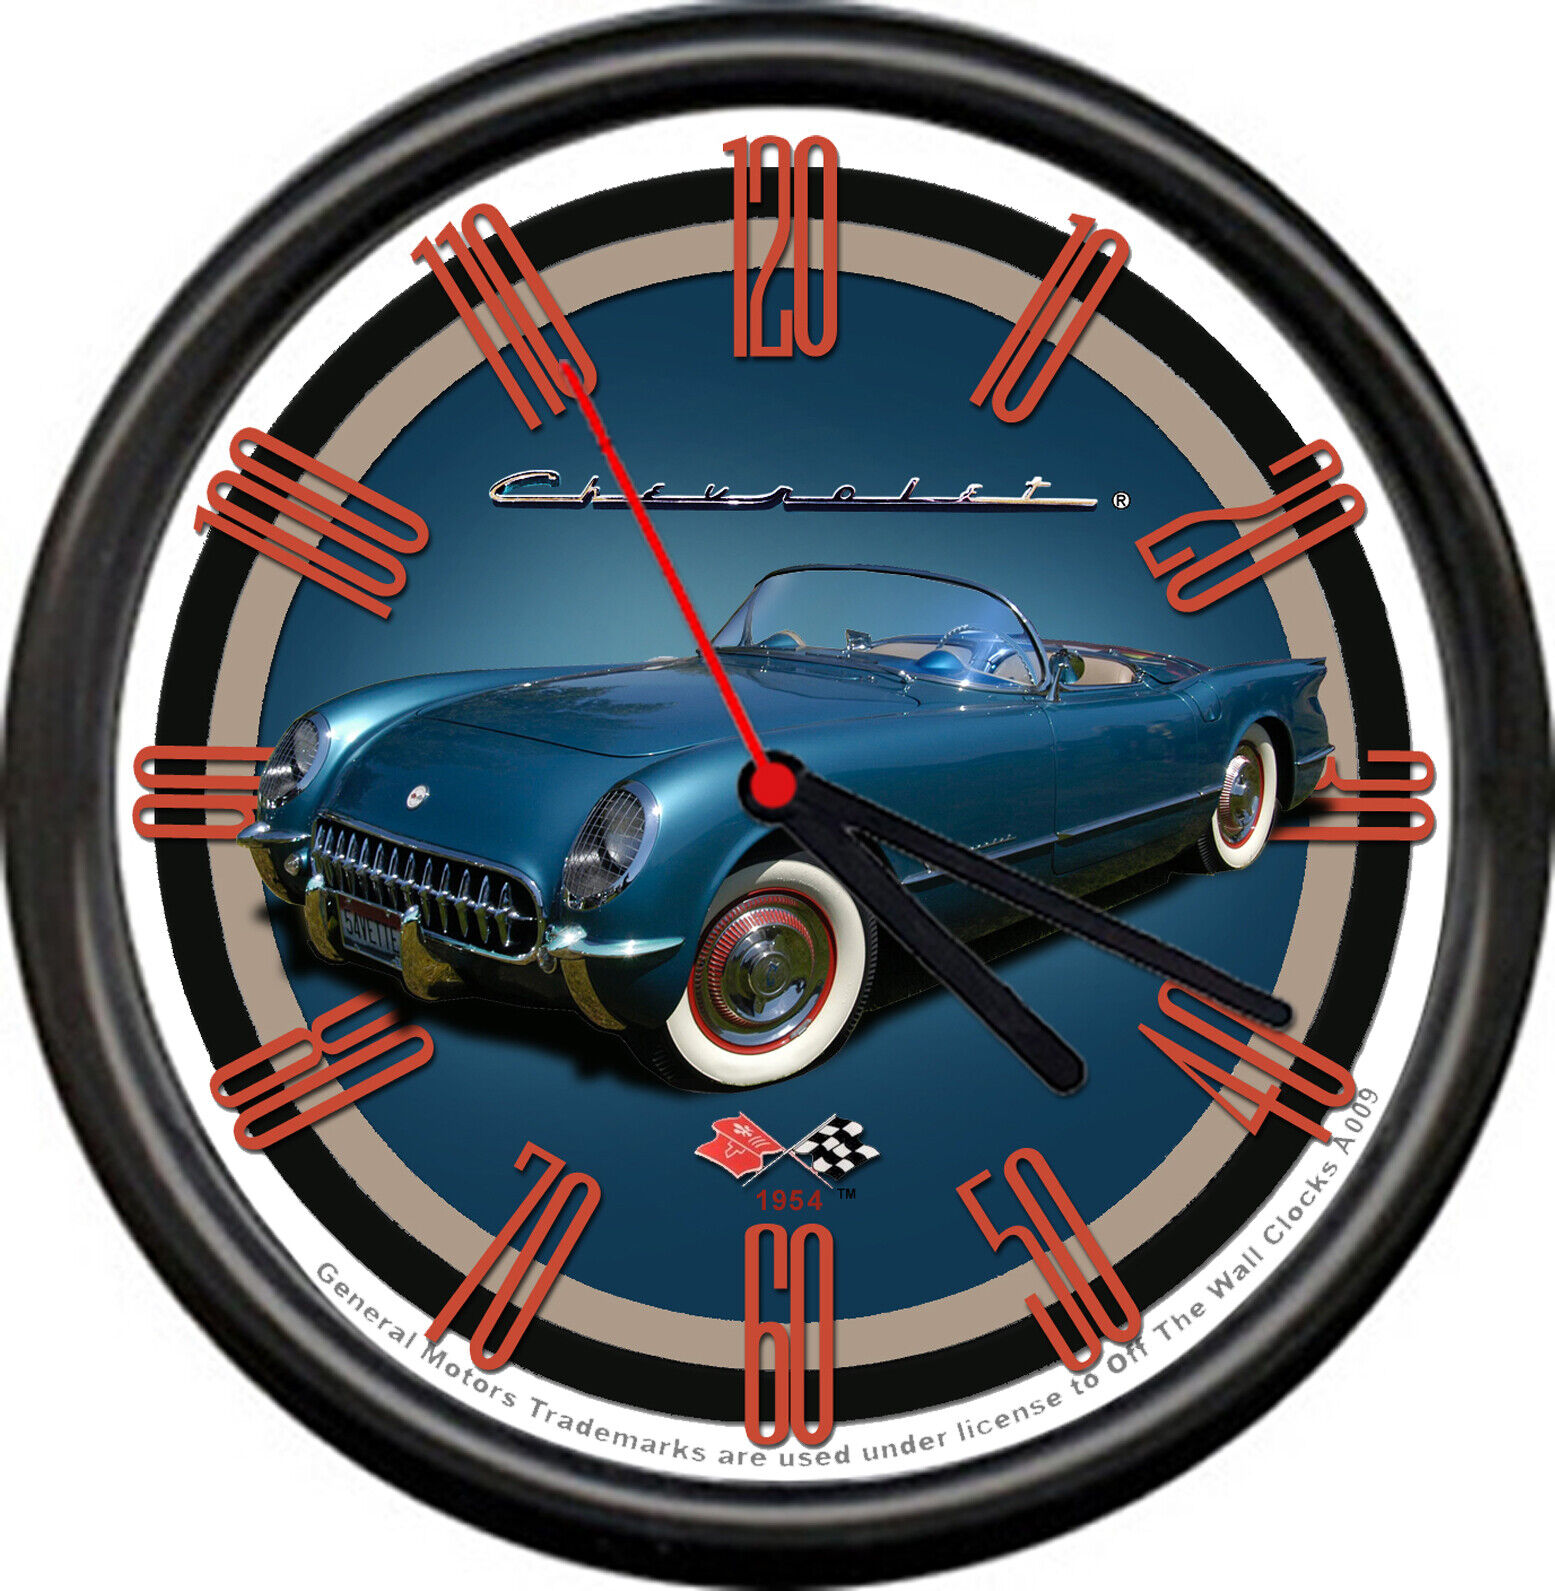 Licensed 1954 Vintage Corvette Blue Convertible General Motors Sign Wall Clock